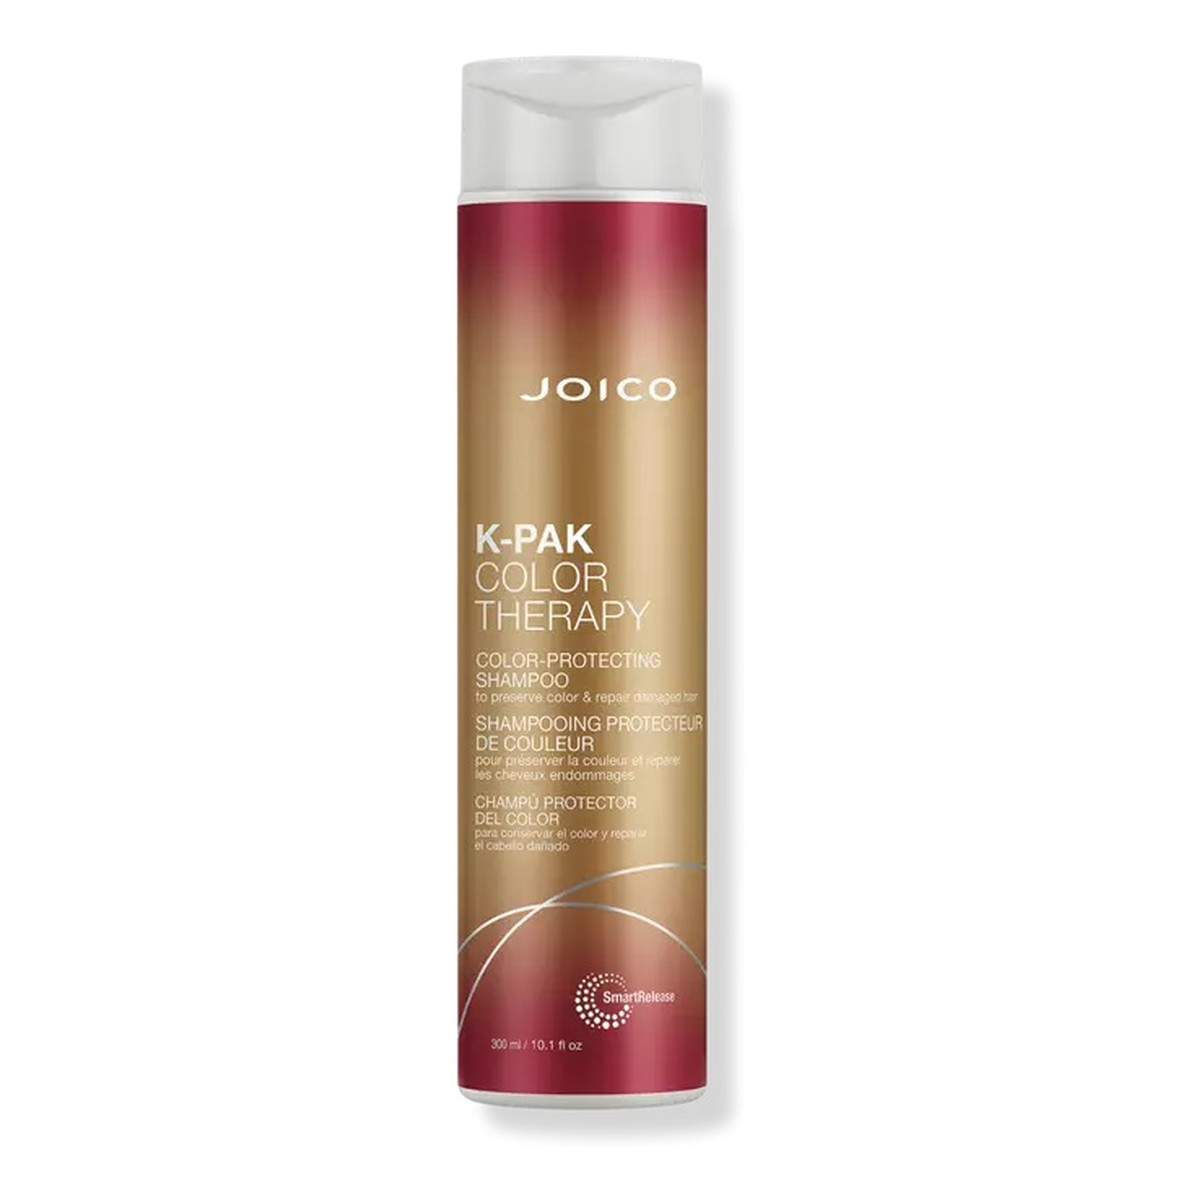 Joico K-pak color therapy color protecting shampoo szampon chroniący kolor włosów 300ml